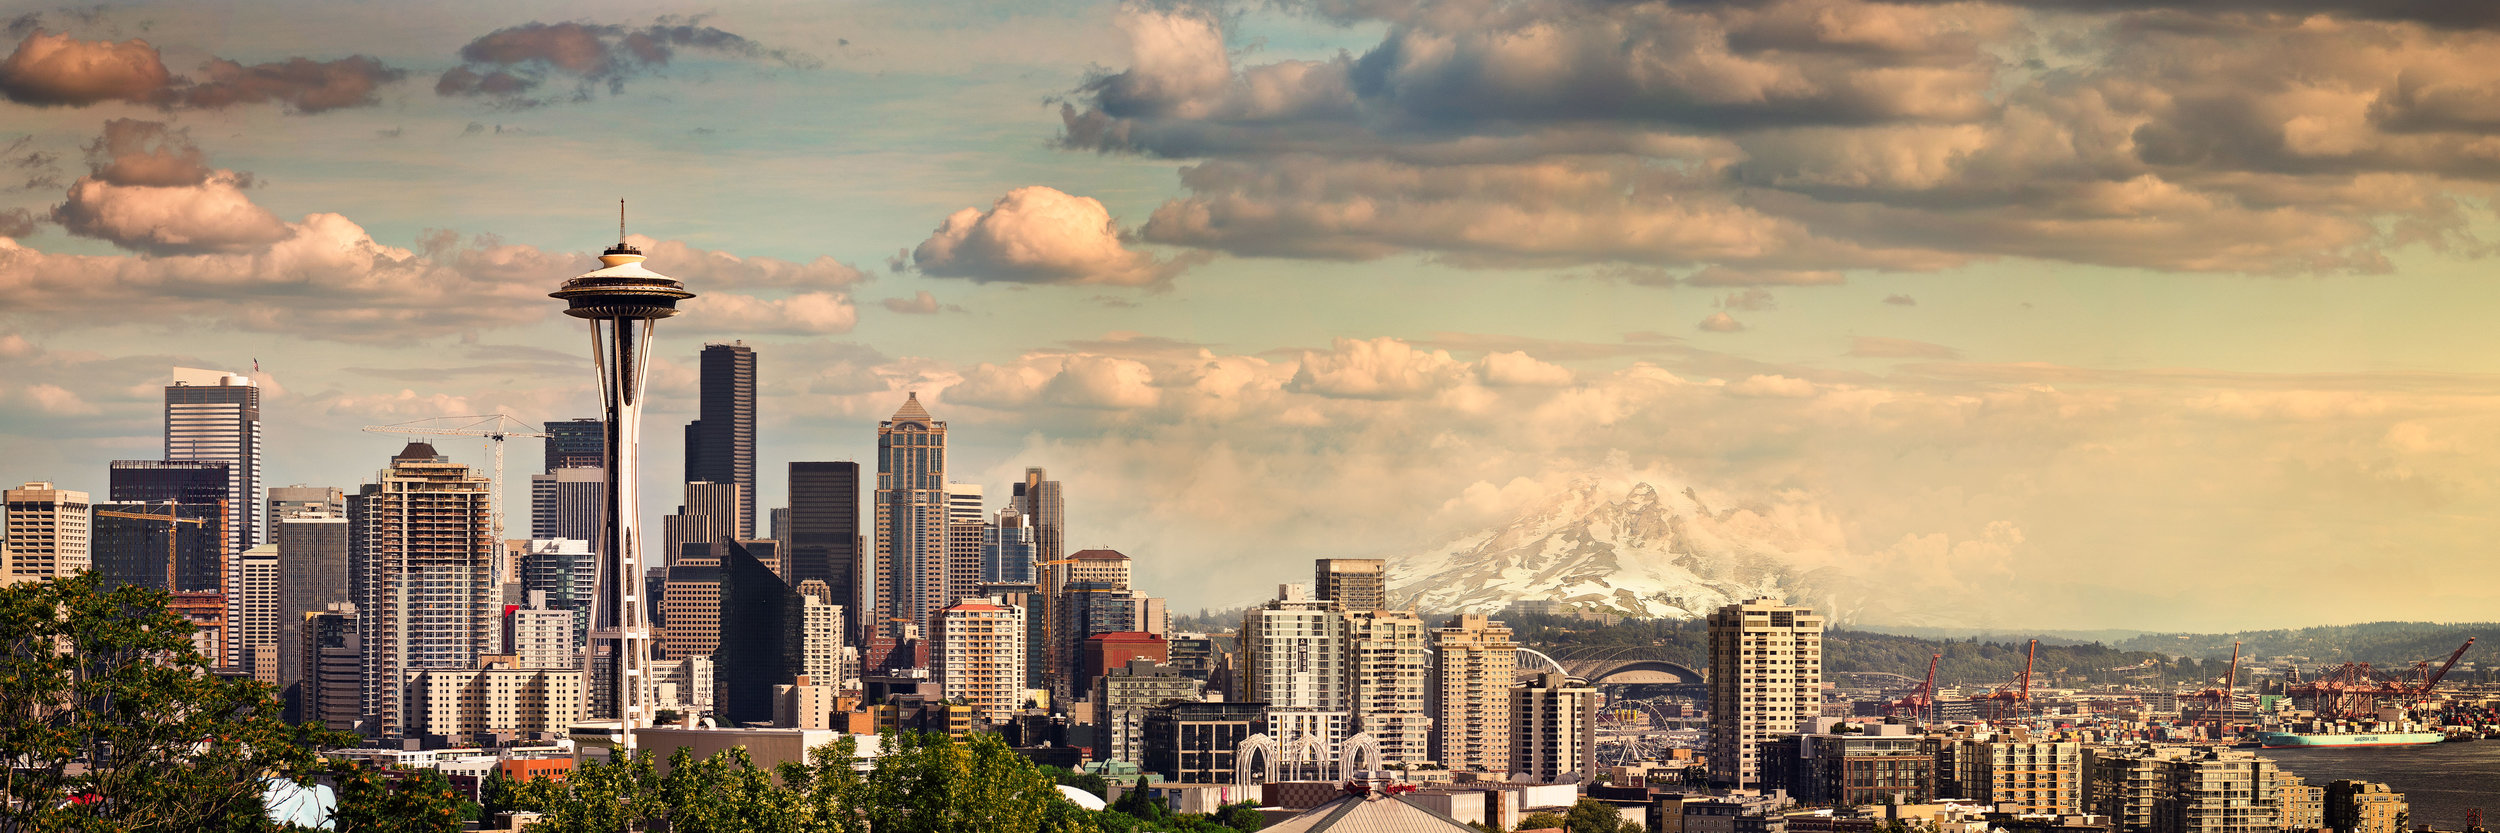 Seattle Skyline-3.jpg